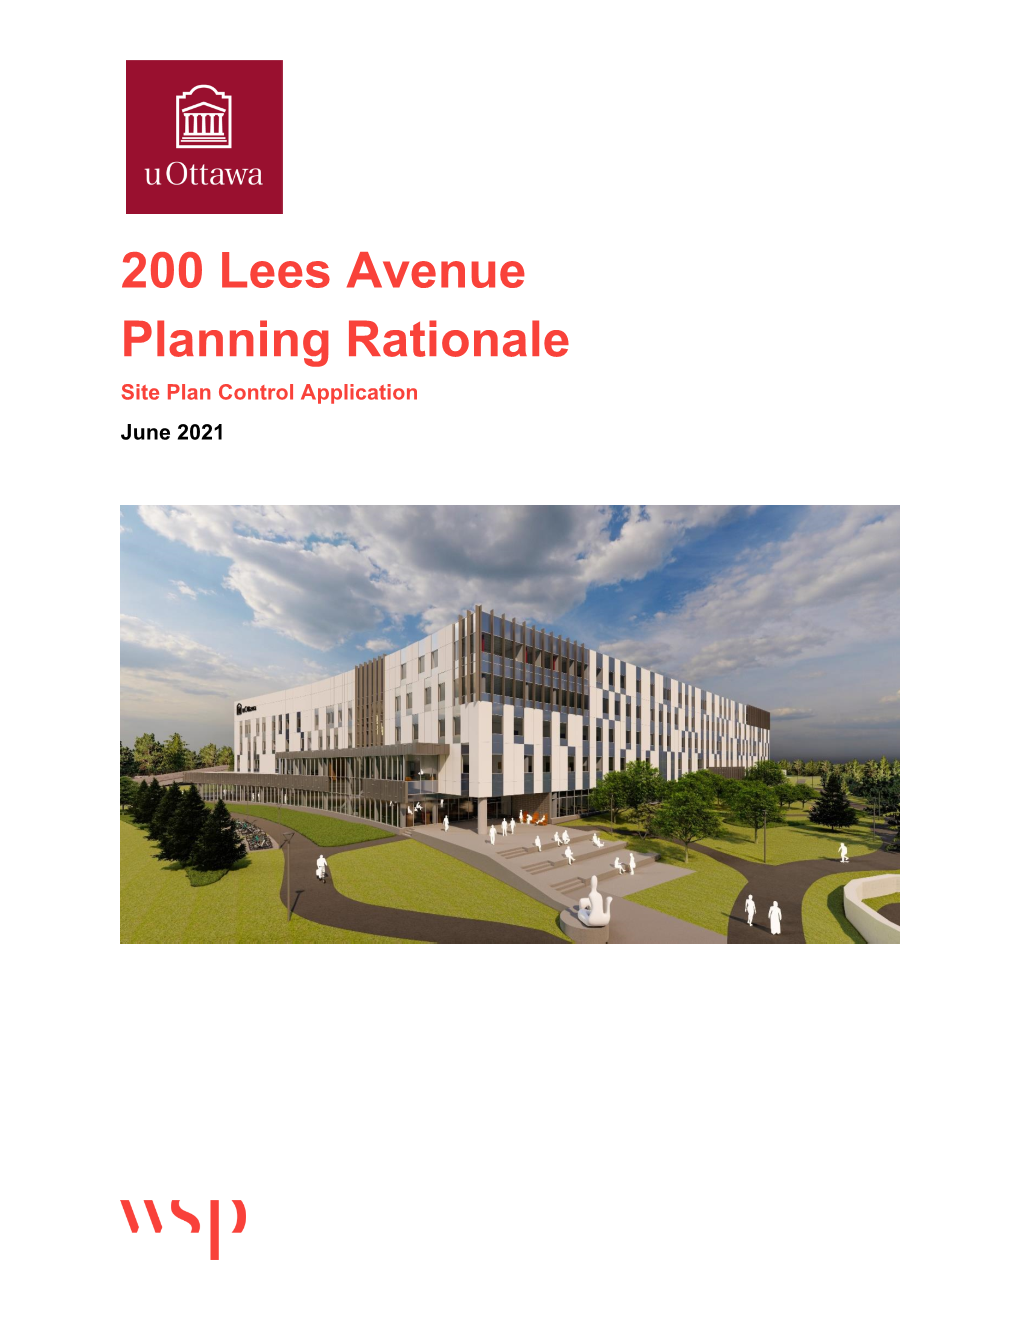 200 Lees Avenue Planning Rationale